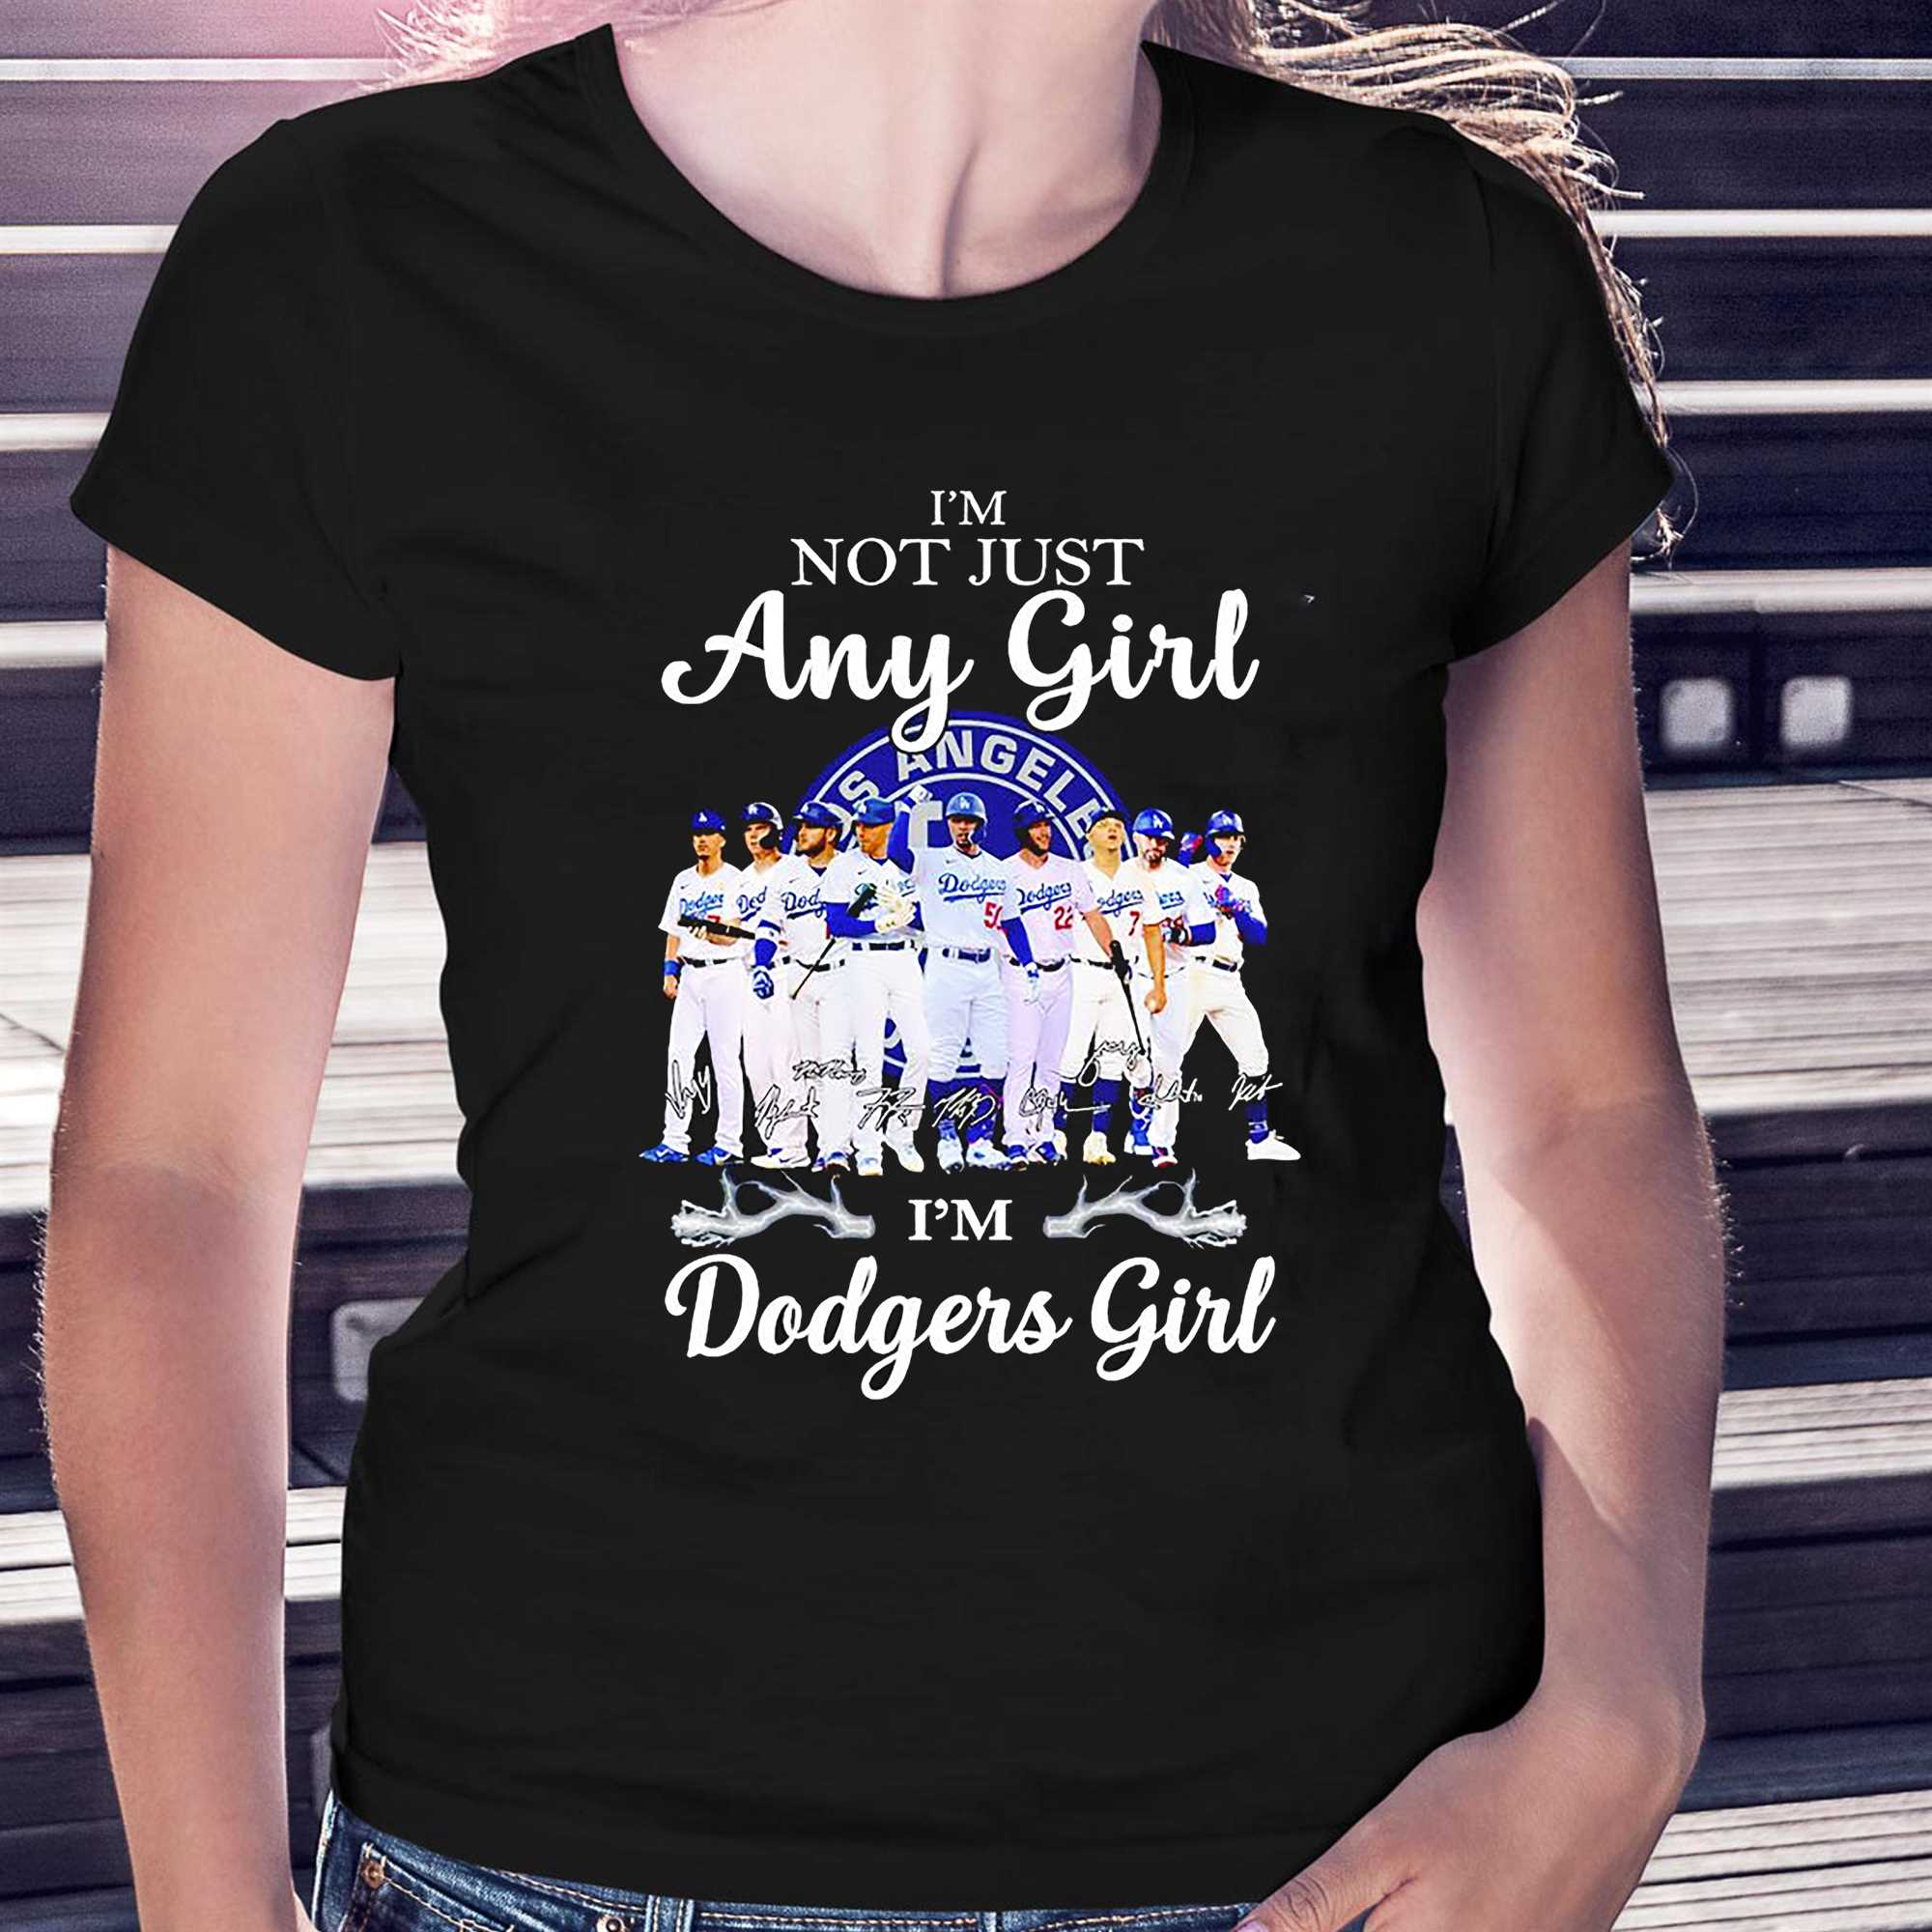 Los Angeles Dodgers Ladies T-Shirts, Dodgers Ladies Shirt, Tees